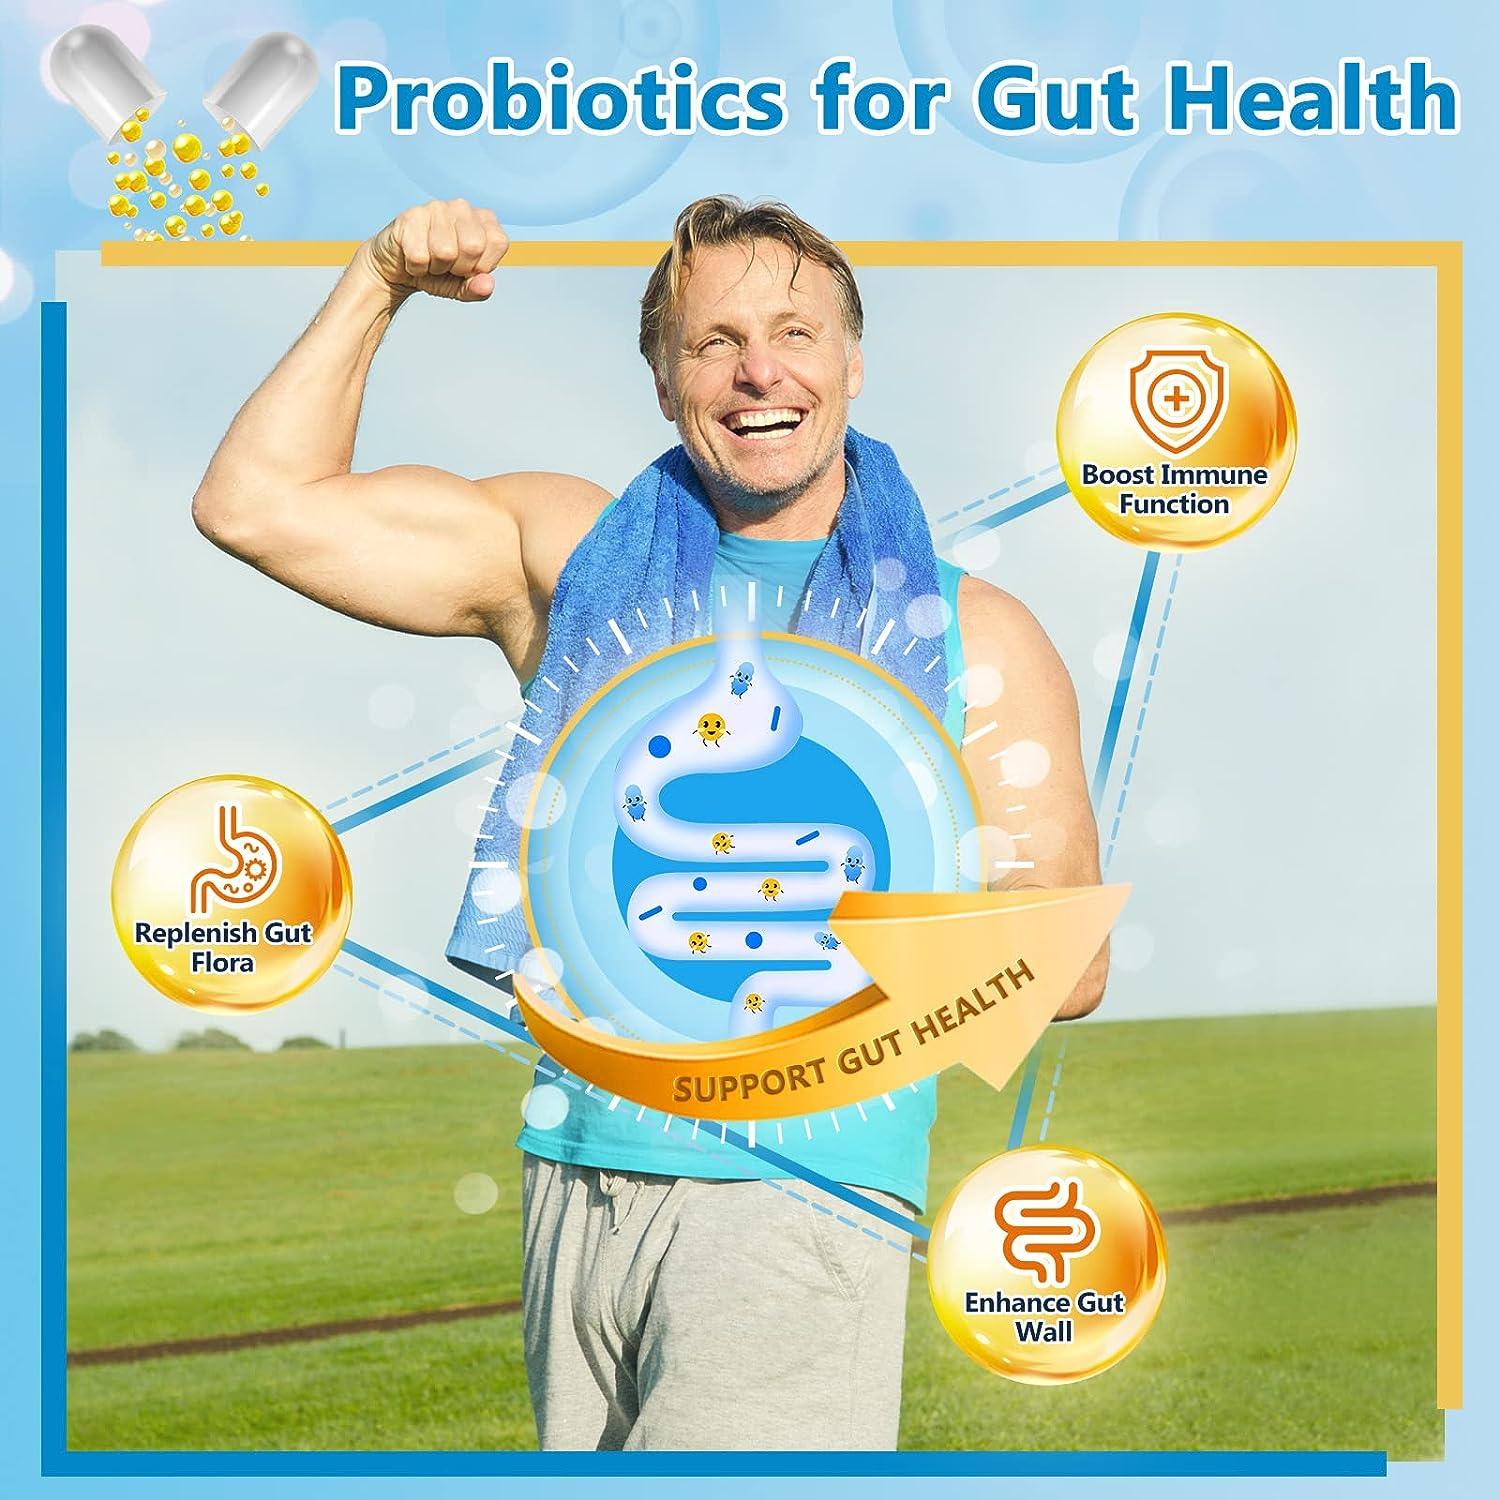 Probiotics promote men's intestinal health